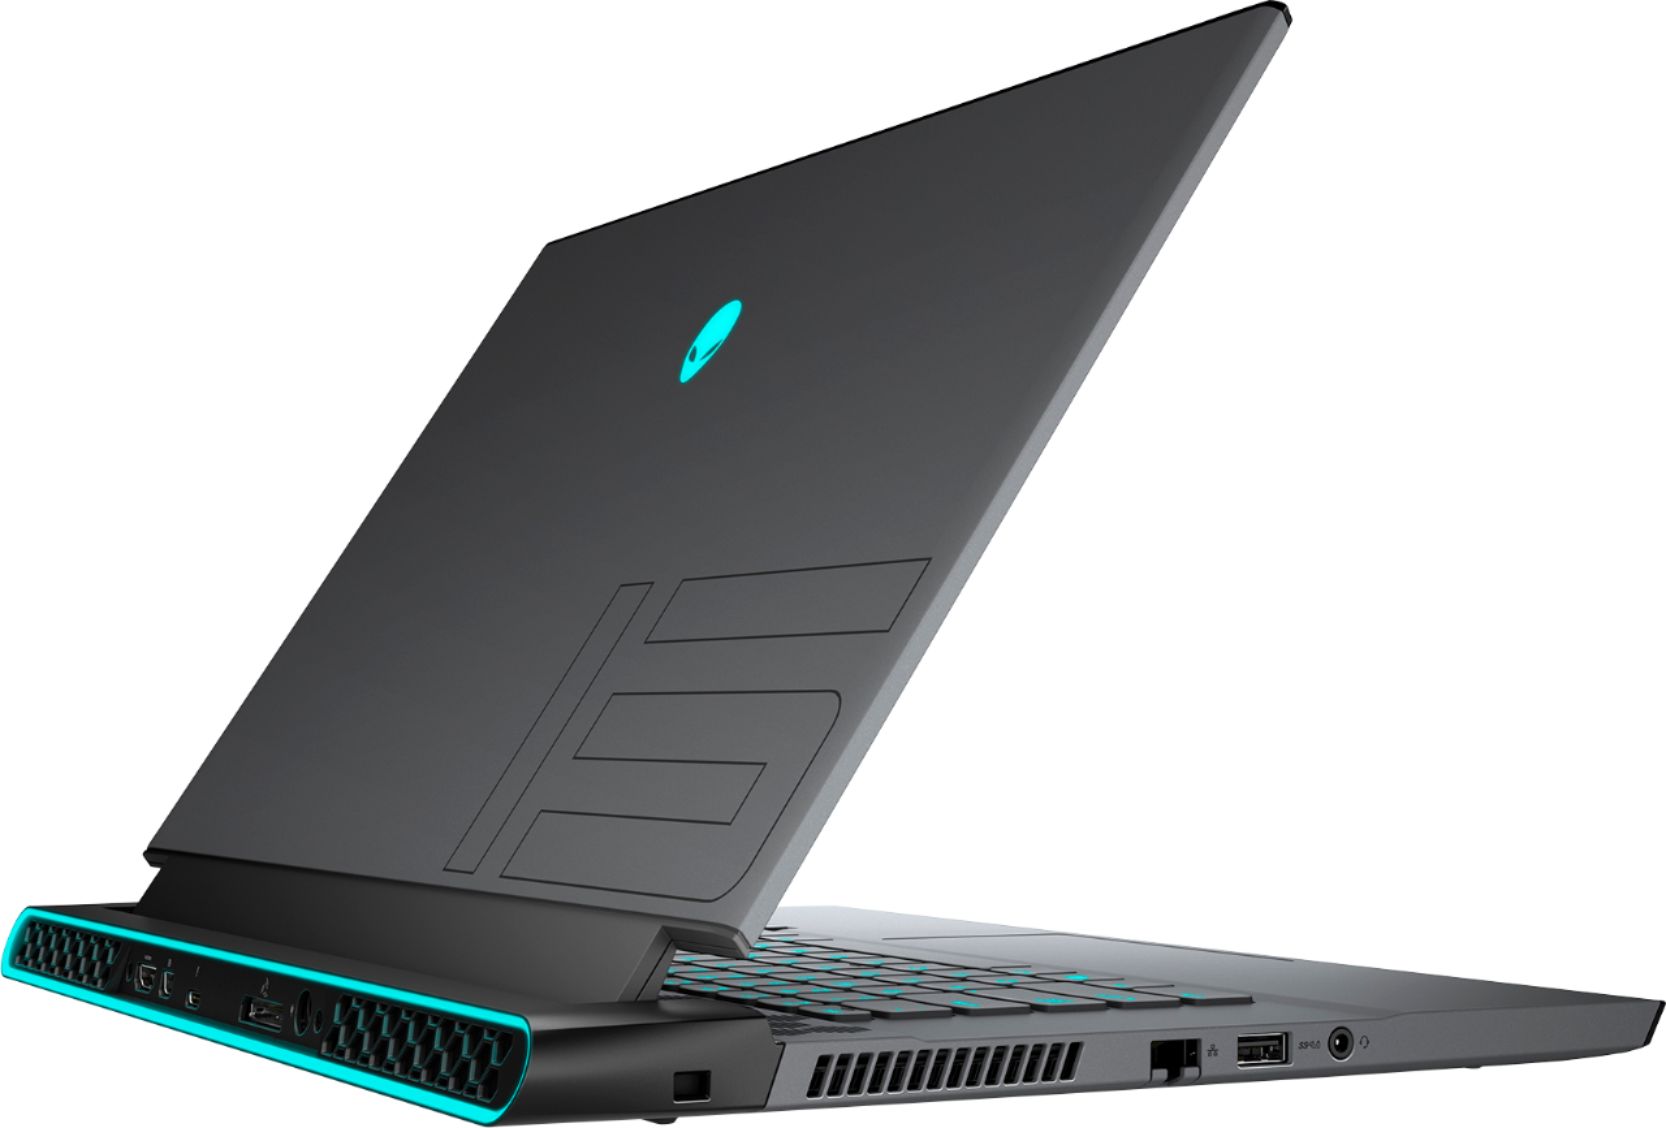 Dell Alienware m15 R3 Gaming and Entertainment Laptop (Intel i7-10750H 6-Core, 16GB RAM, 2x1TB PCIe SSD RAID 1 (1TB), 15.6" Full HD (1920x1080), NVIDIA RTX 2070 Super, Wifi, Bluetooth, Win 10 Pro) - image 4 of 6